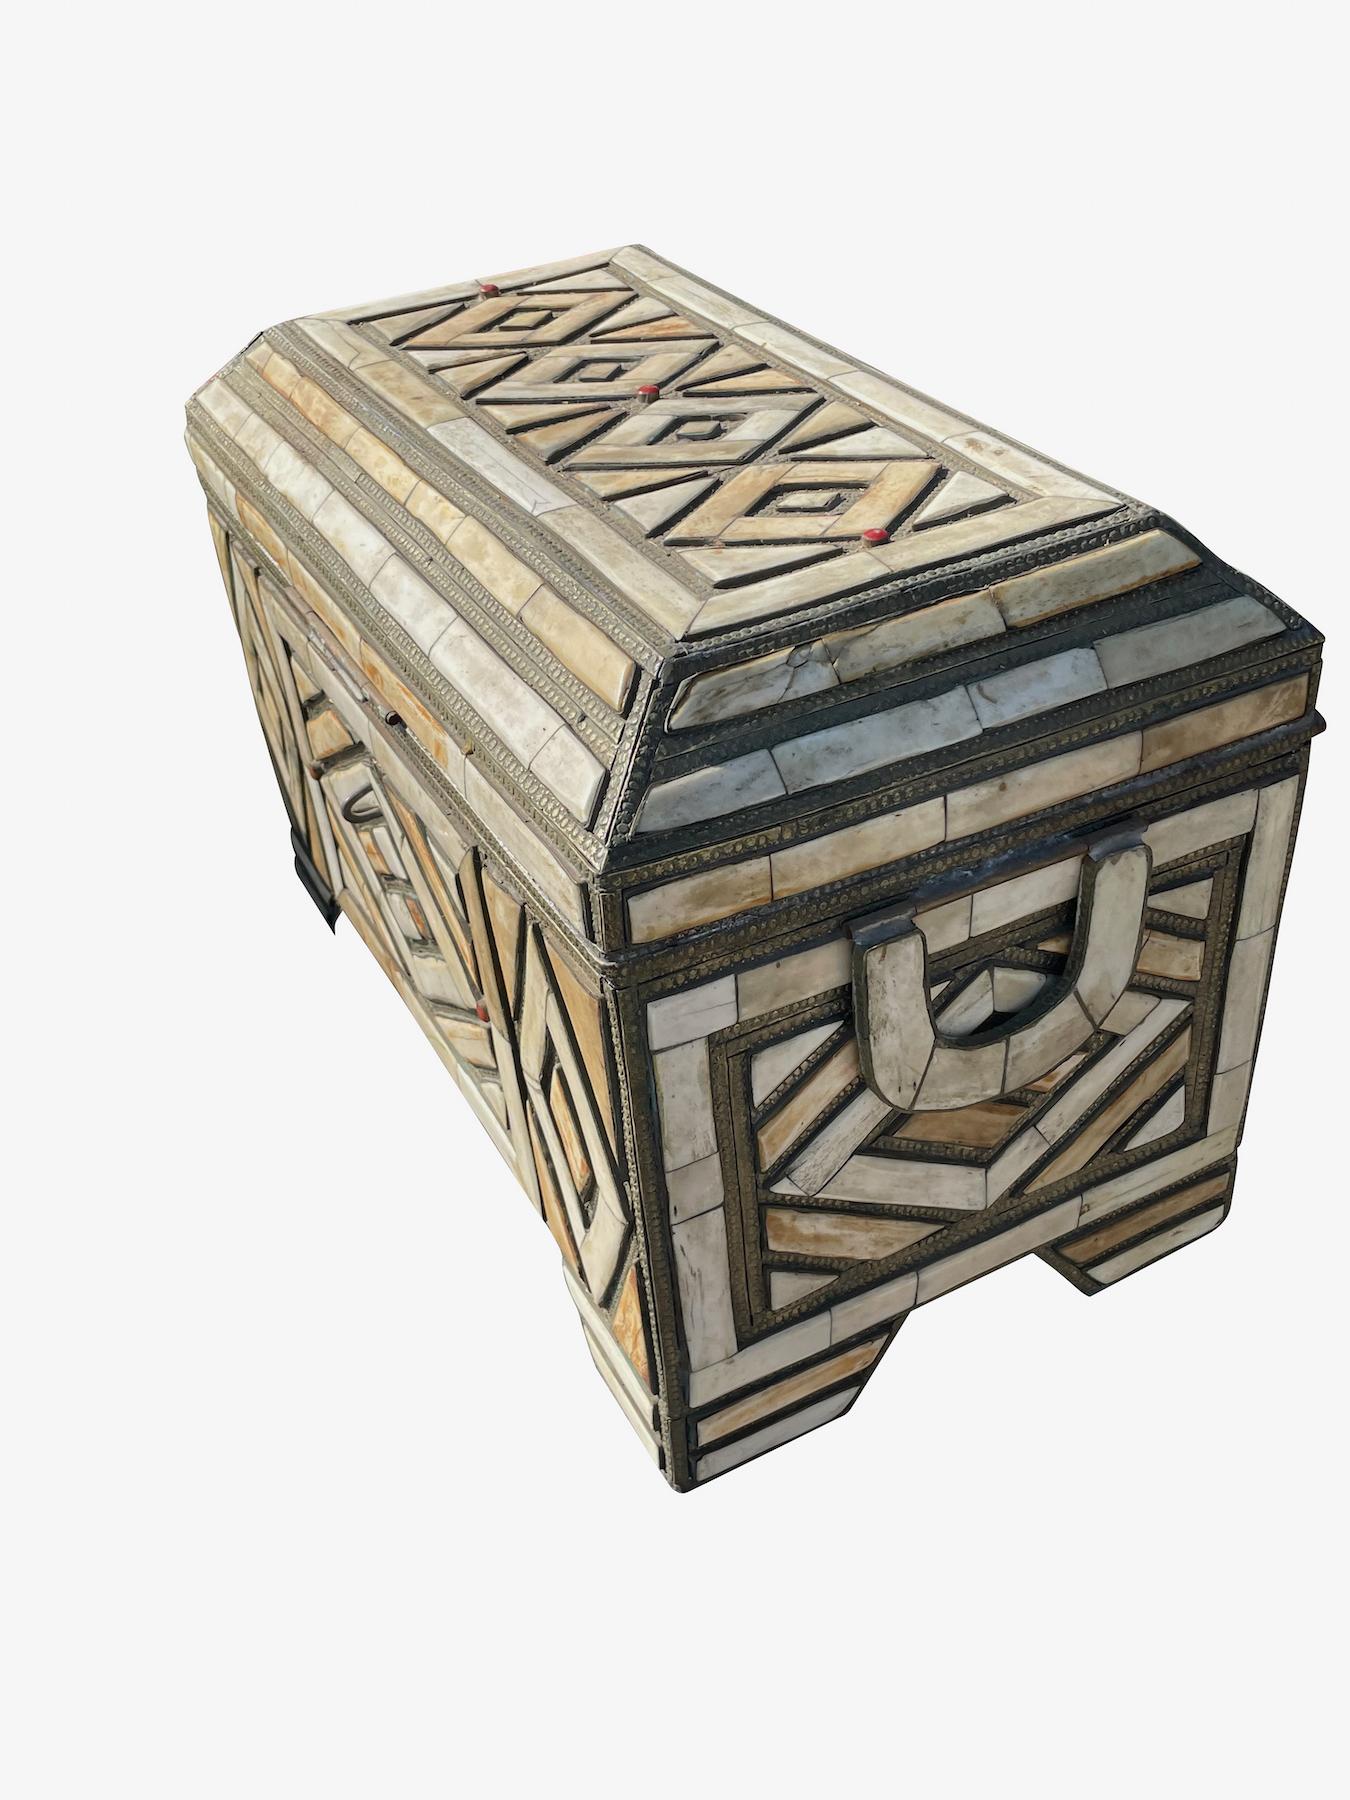 19th century Moroccan bone inlay box.
Decorative silver trim.
Geometric pattern design.